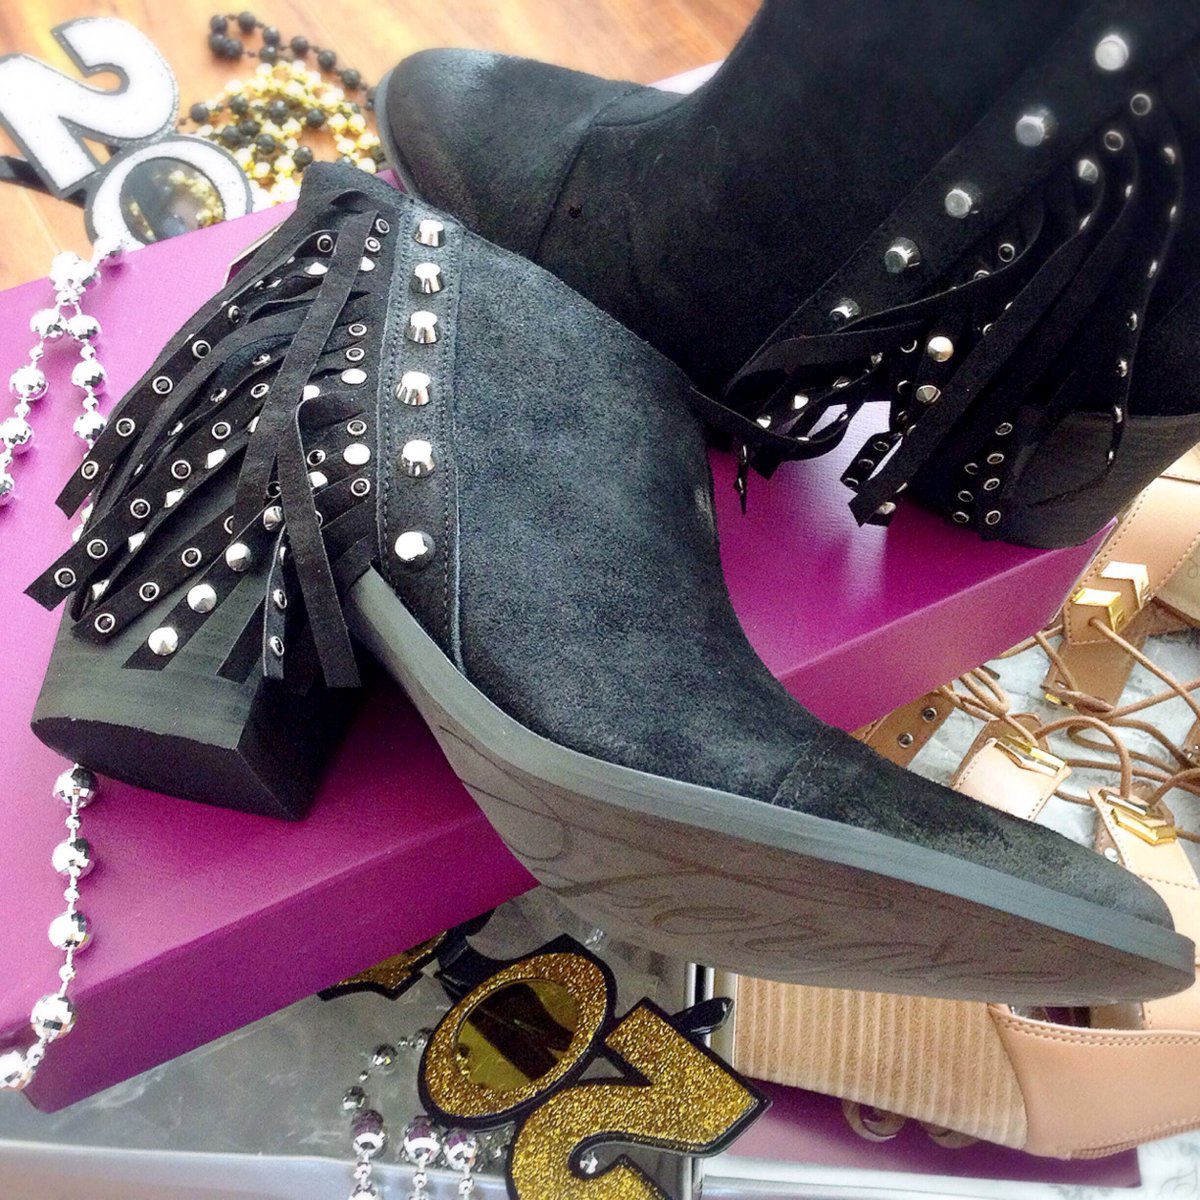 RT @FergieFootwear: #KickOff yr #HappyShoeYear w/ 15% OFF @Fergie shoes & boots!Use #promocode FERGIE15 thru 1/1!https://t.co/MydKEB7Eyv ht…